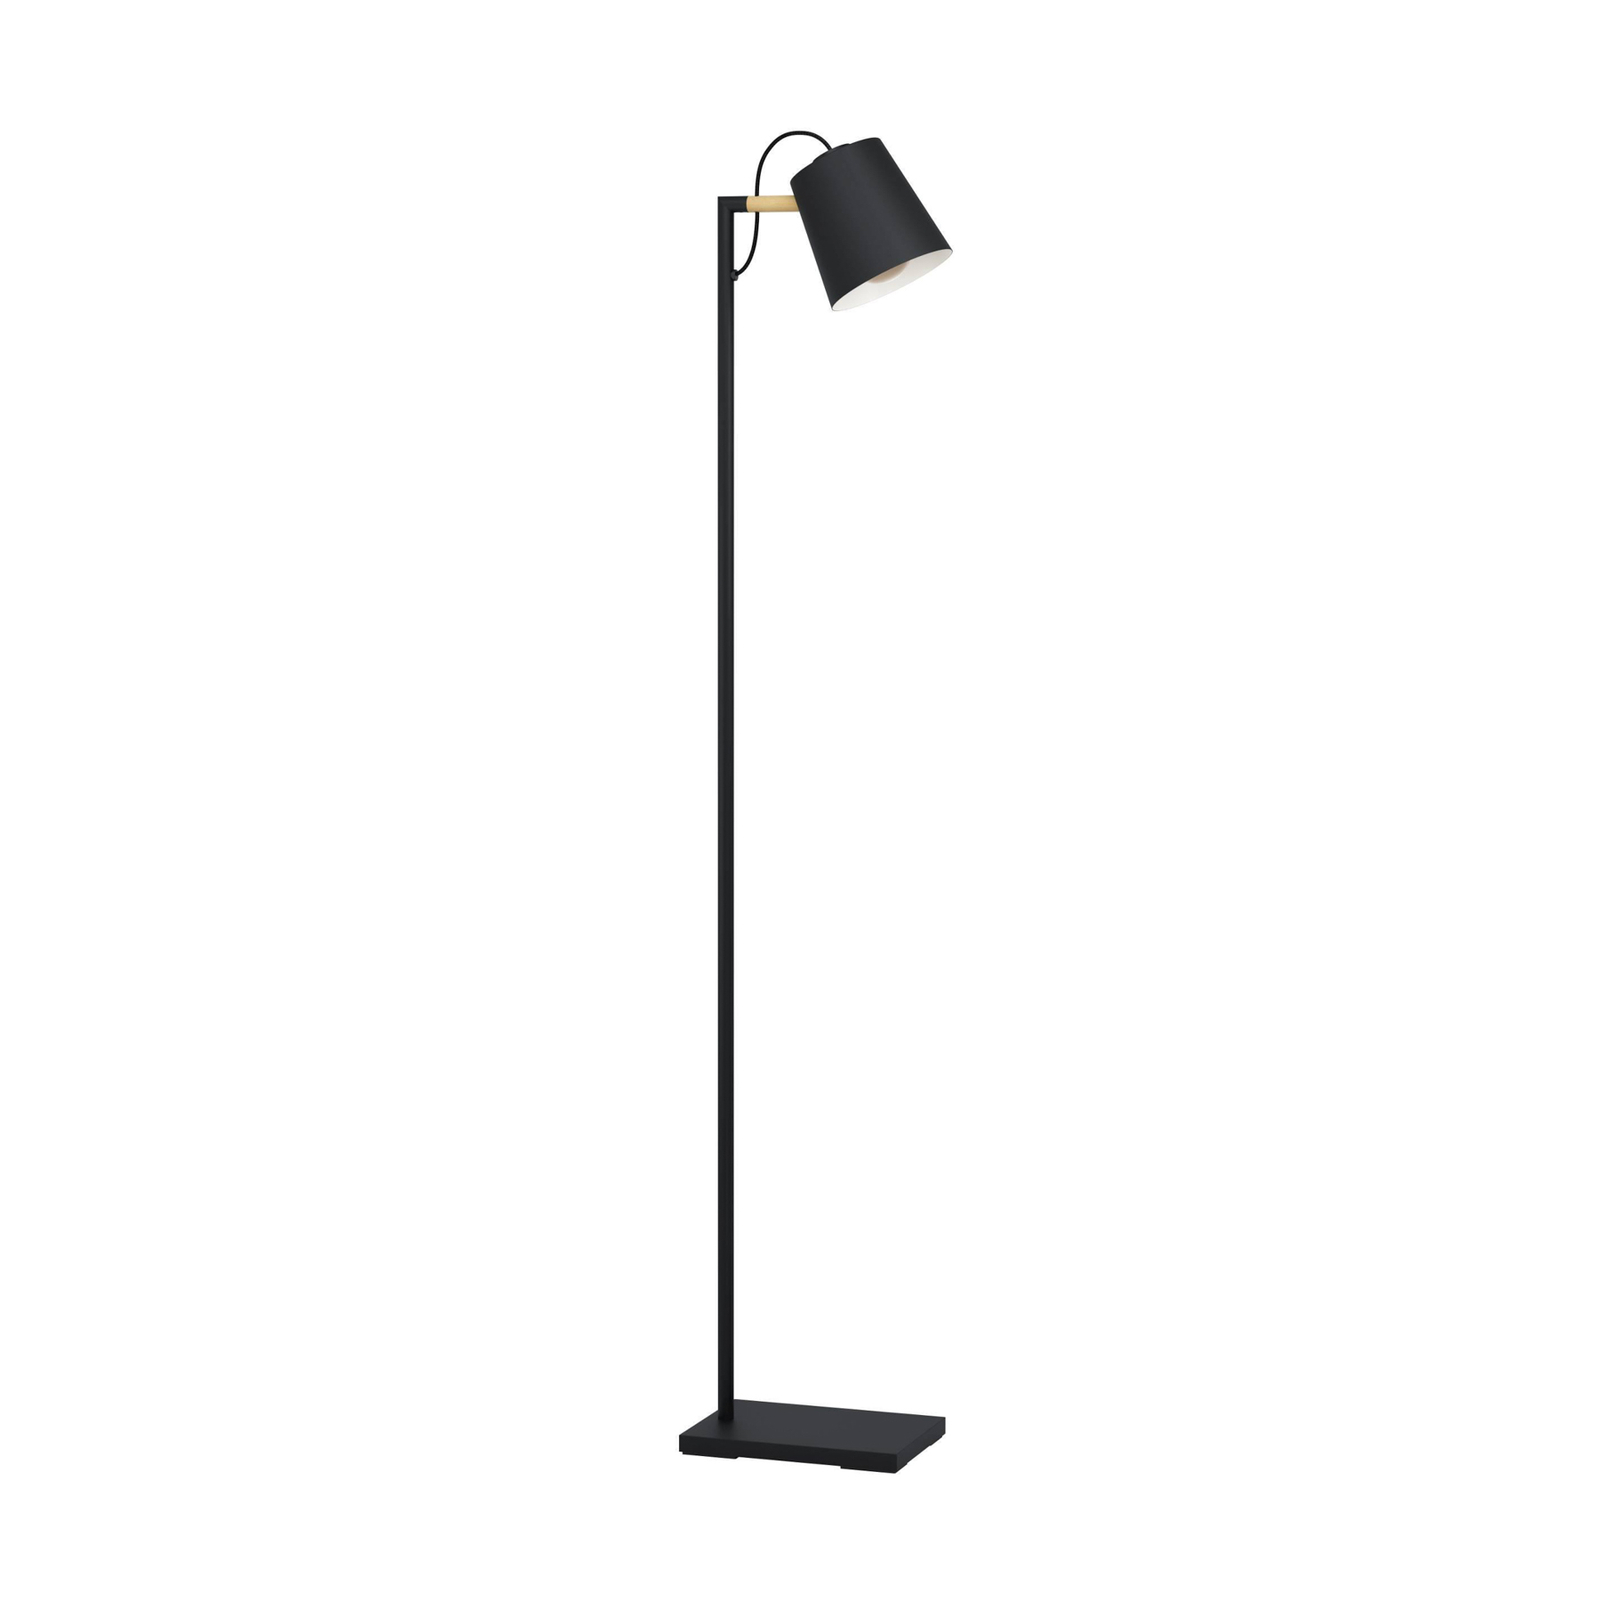 Lacey gulvlampe, høyde 159,5 cm, svart, stål